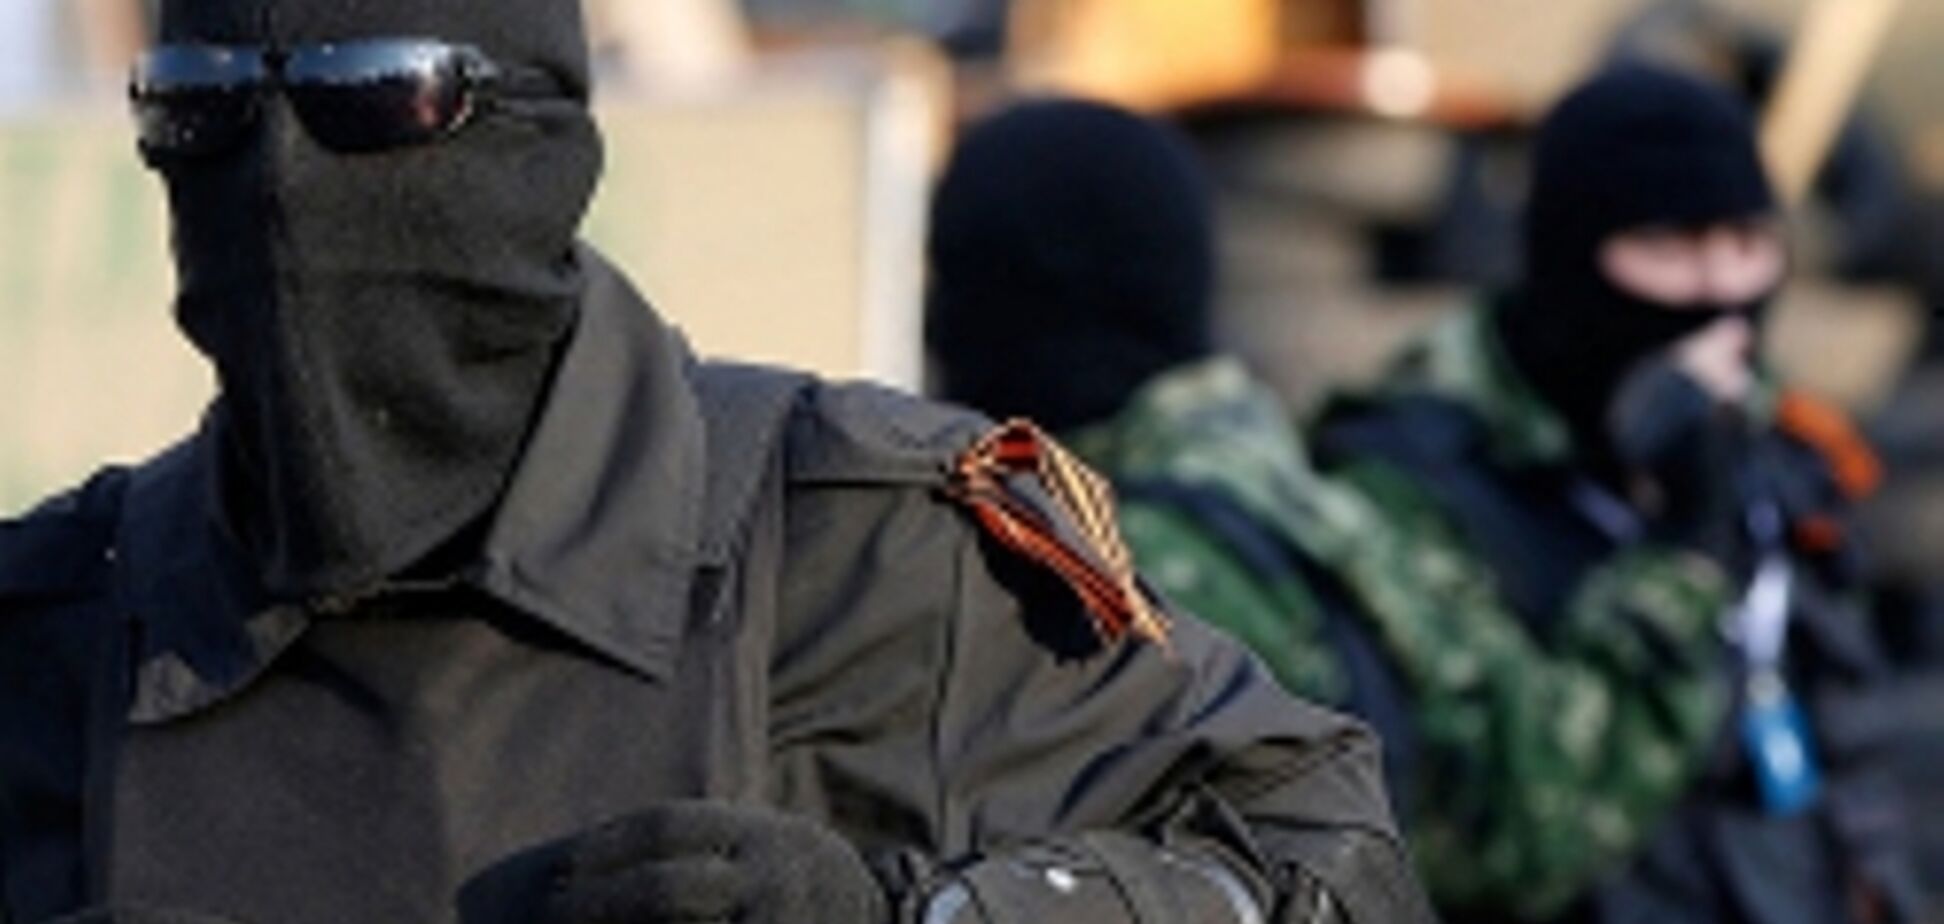 Представителей ОБСЕ похитили террористы - МИД